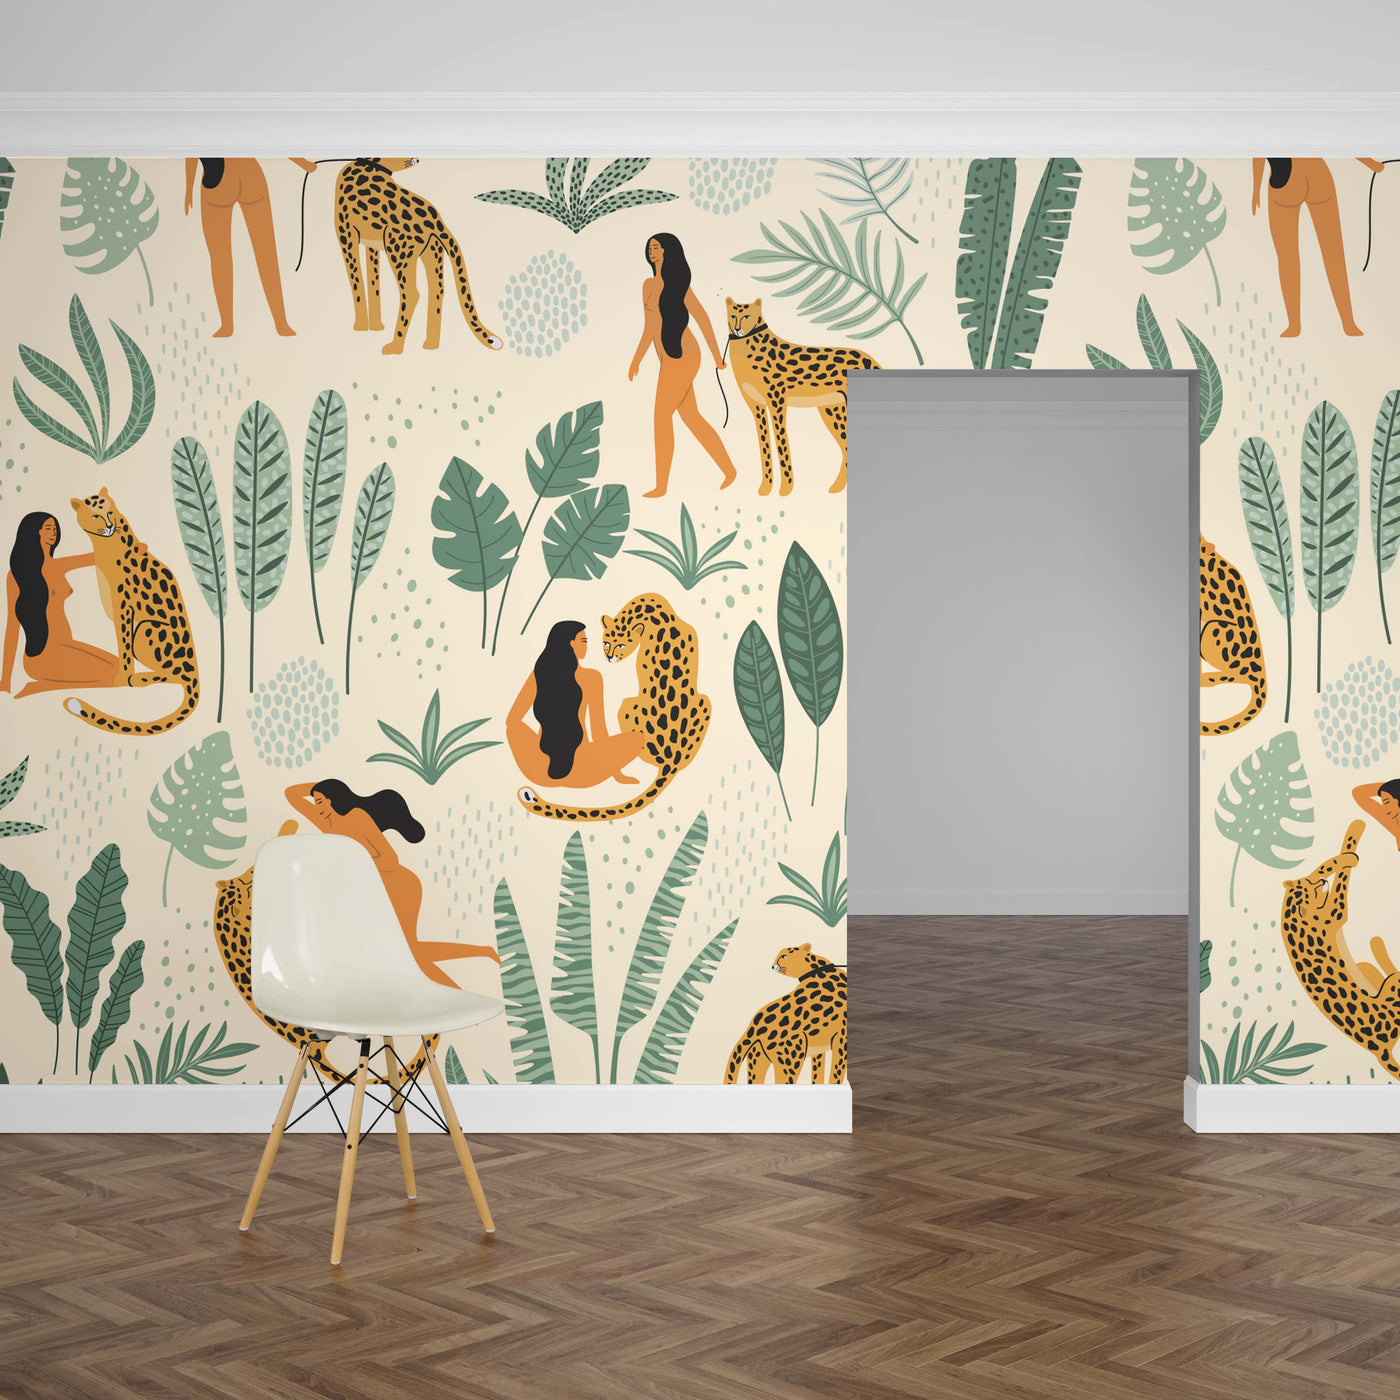 Woman in the Wild Mural Wallpaper (m²)-Wall Decor-LEAF WALLPAPER, MURALS, MURALS / WALLPAPERS, NATURE WALL ART, NON-WOVEN WALLPAPER, TROPICAL MURAL, TROPICAL WALLPAPERS-Forest Homes-Nature inspired decor-Nature decor